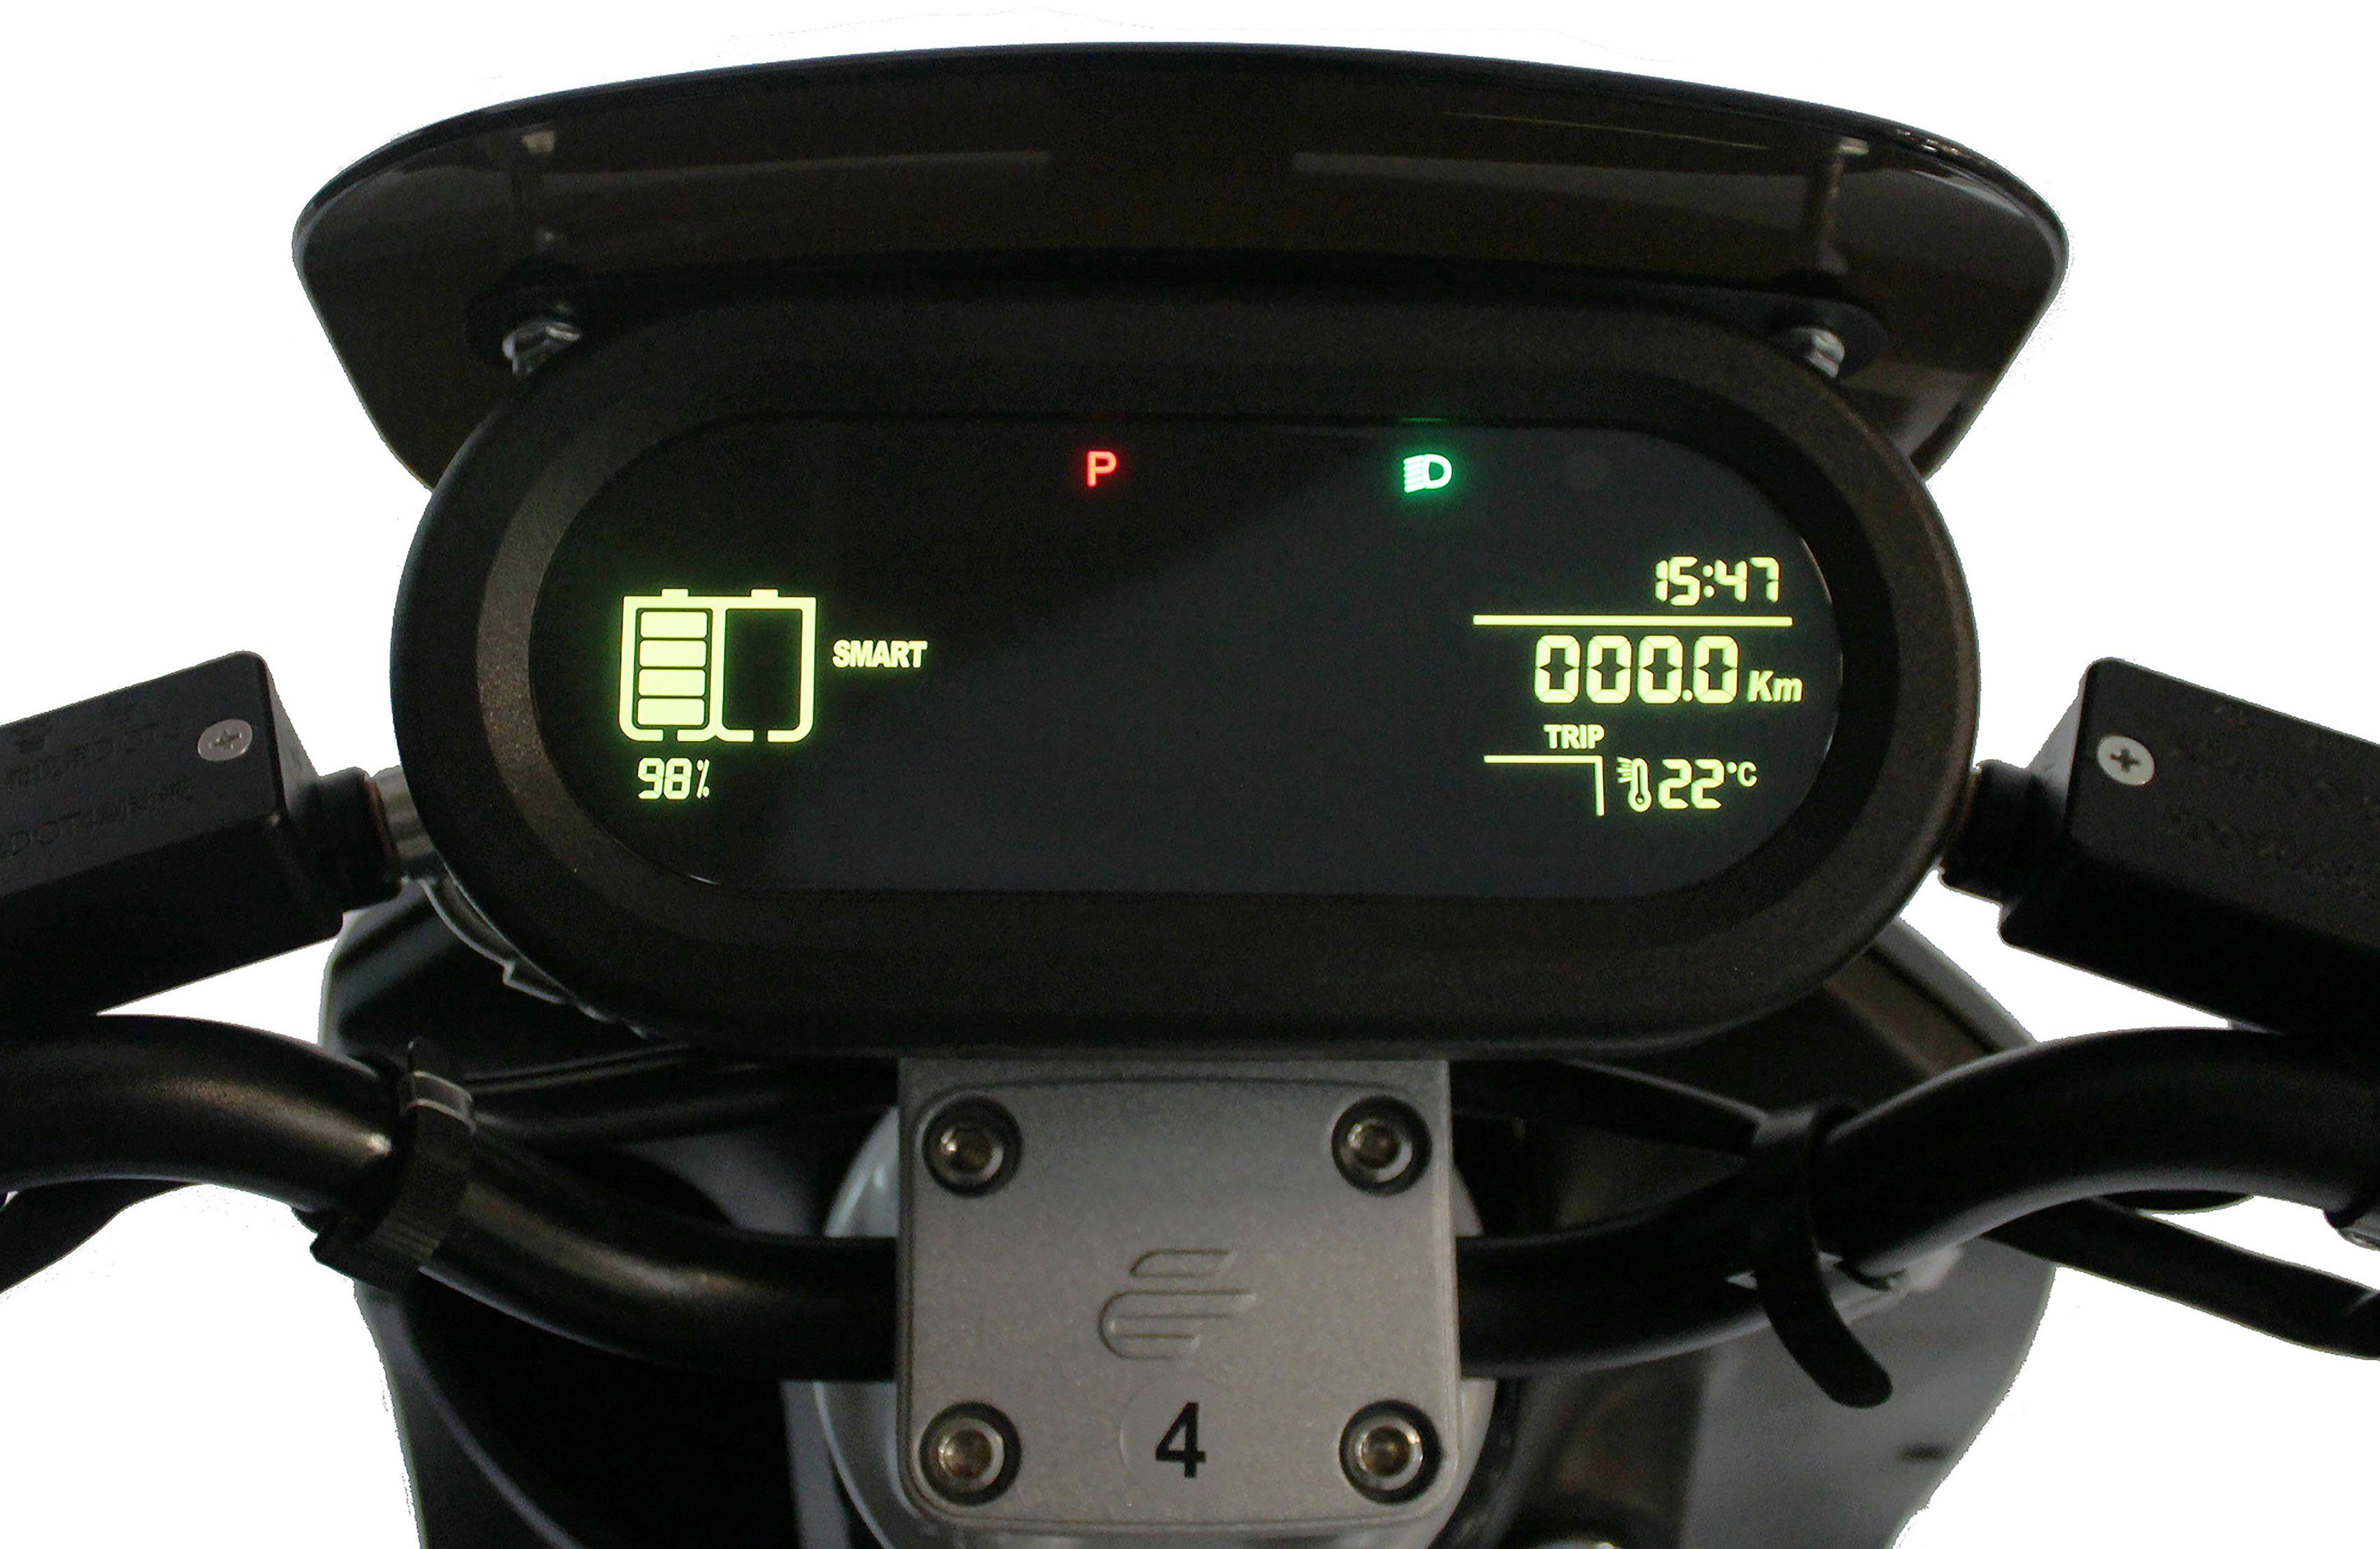 SAXXX E-Motorroller Ecooter E2MAX km/h 80 75km/h, schwarz